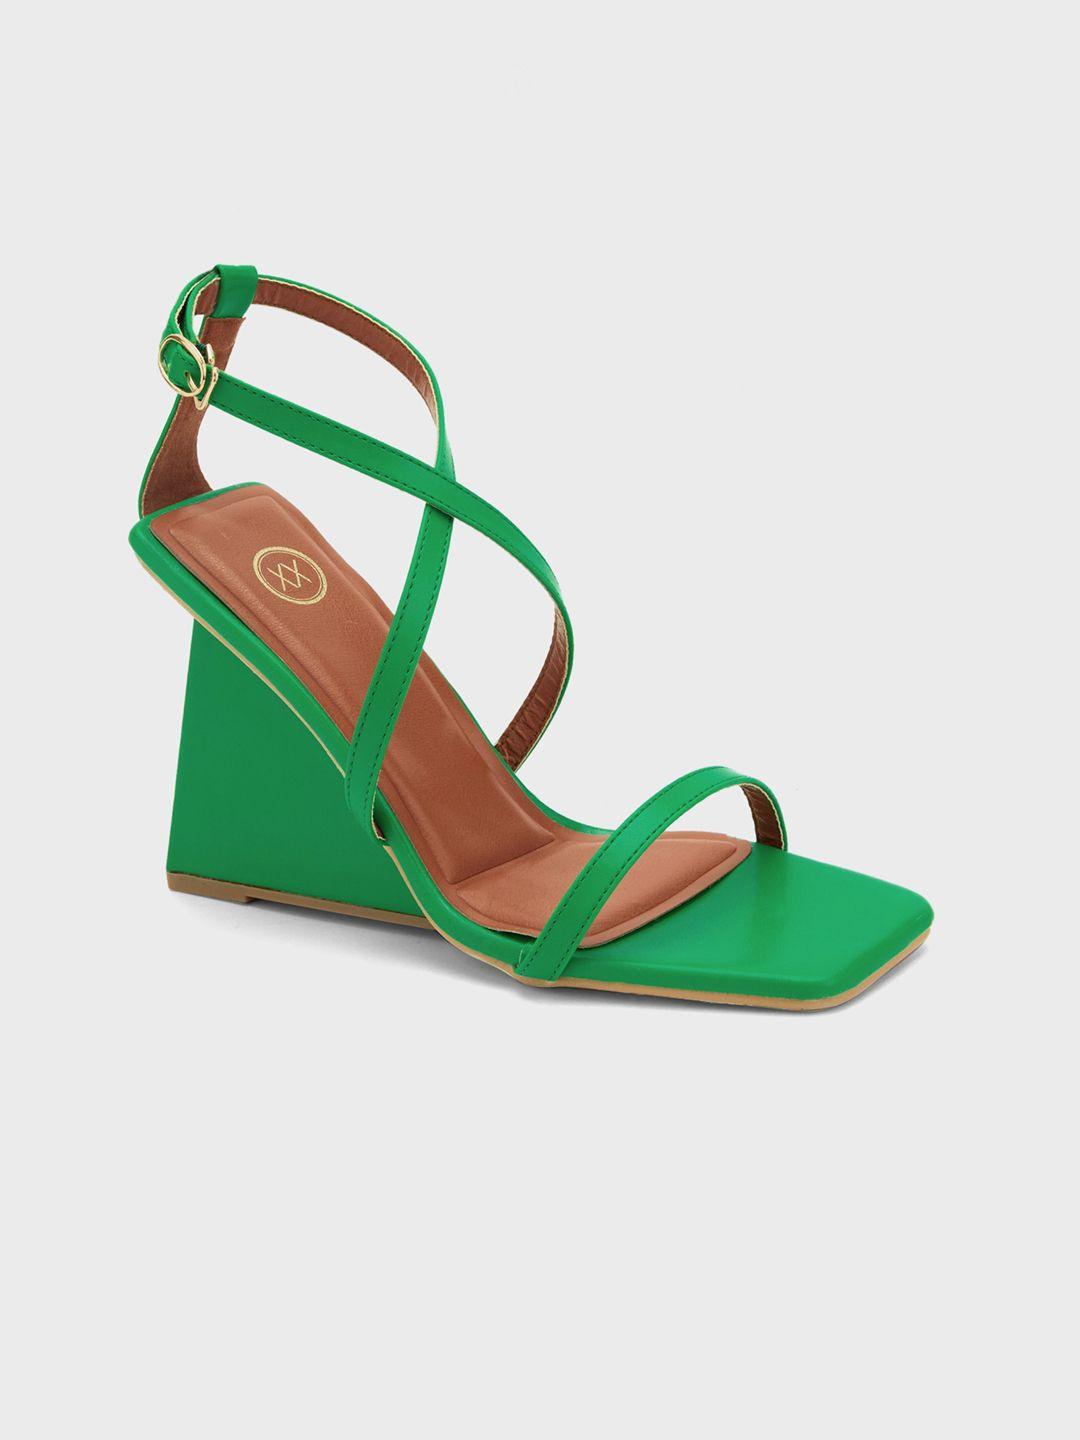 20dresses green strappy triangular block heels